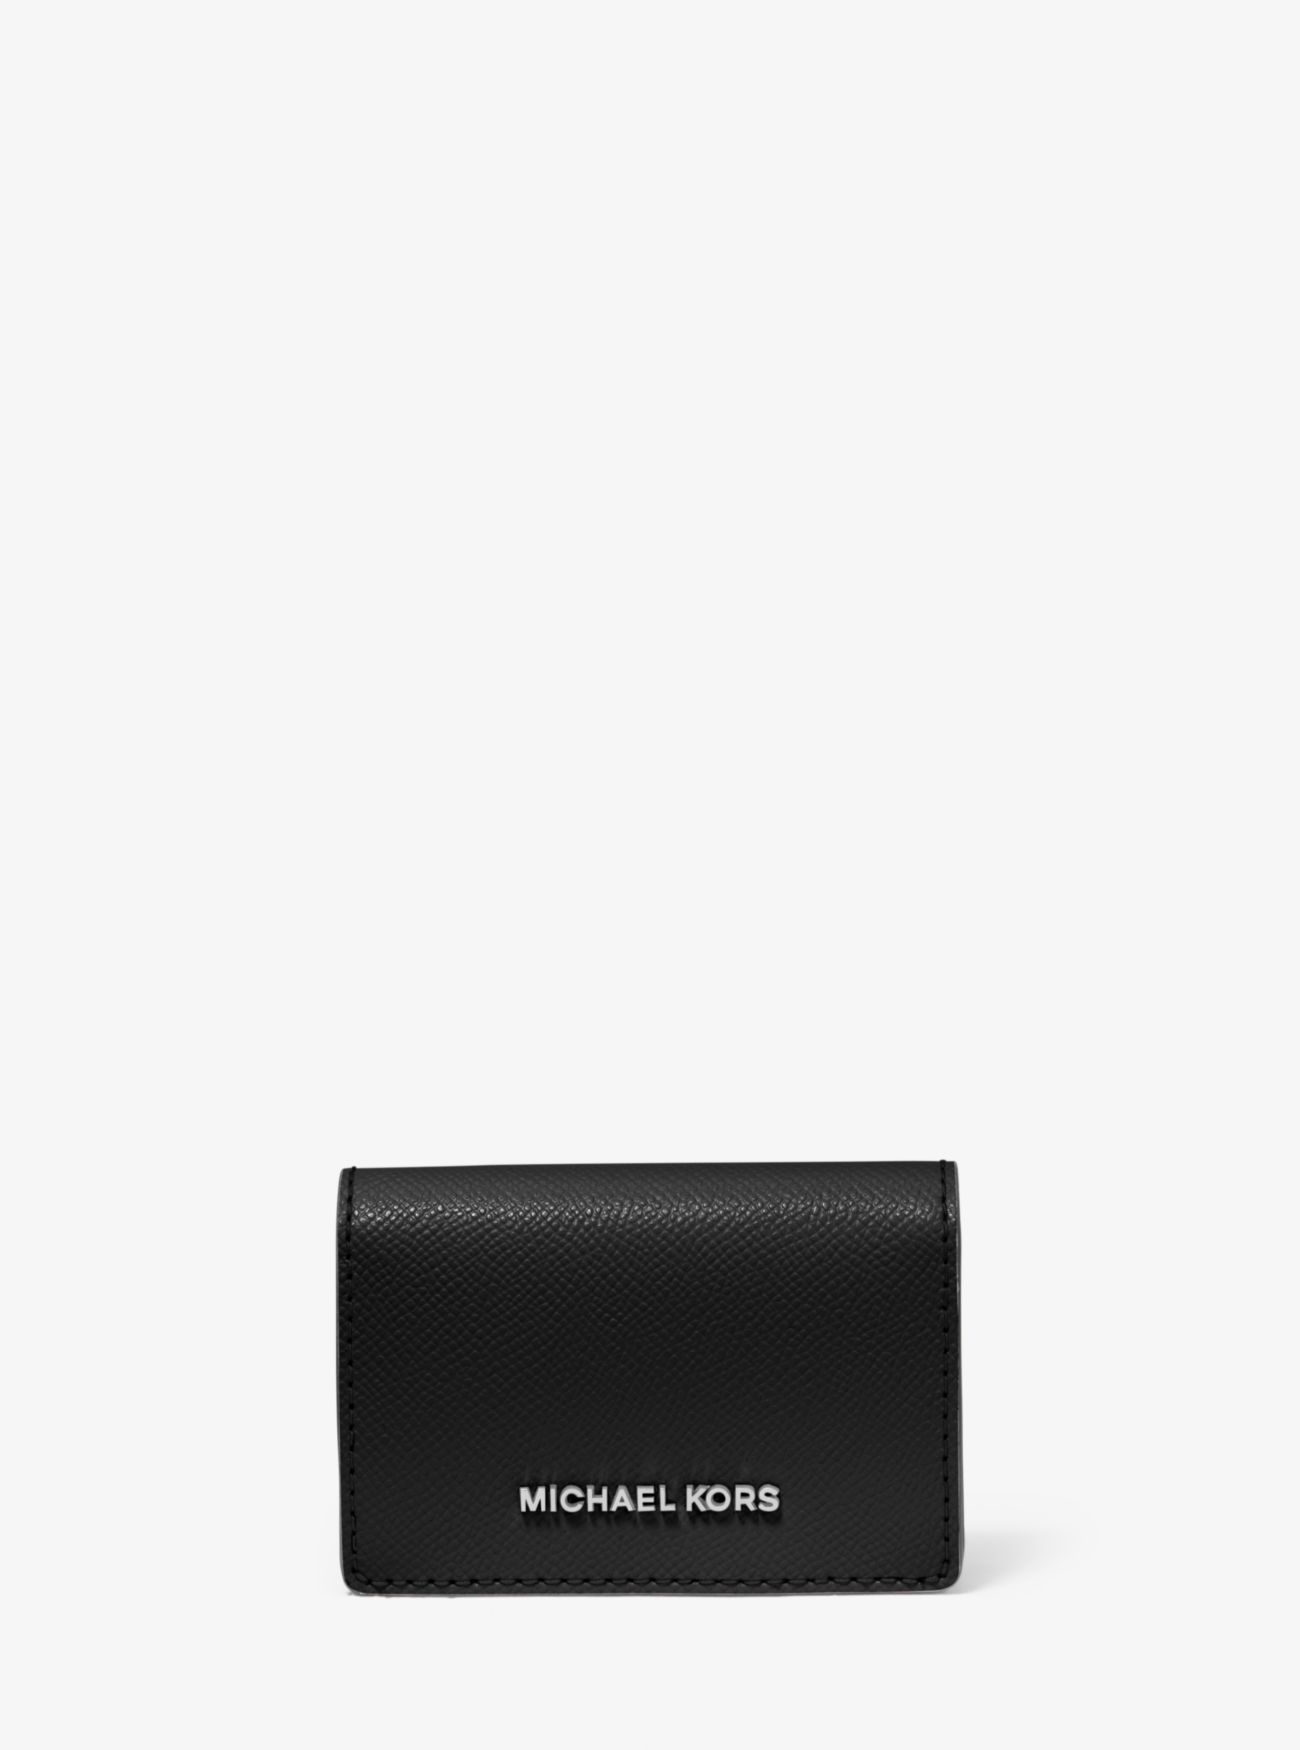 Recept tavle At MK Small Crossgrain Leather Wallet - Black/grey - Michael Kors | ricciano  AUSTRALIA